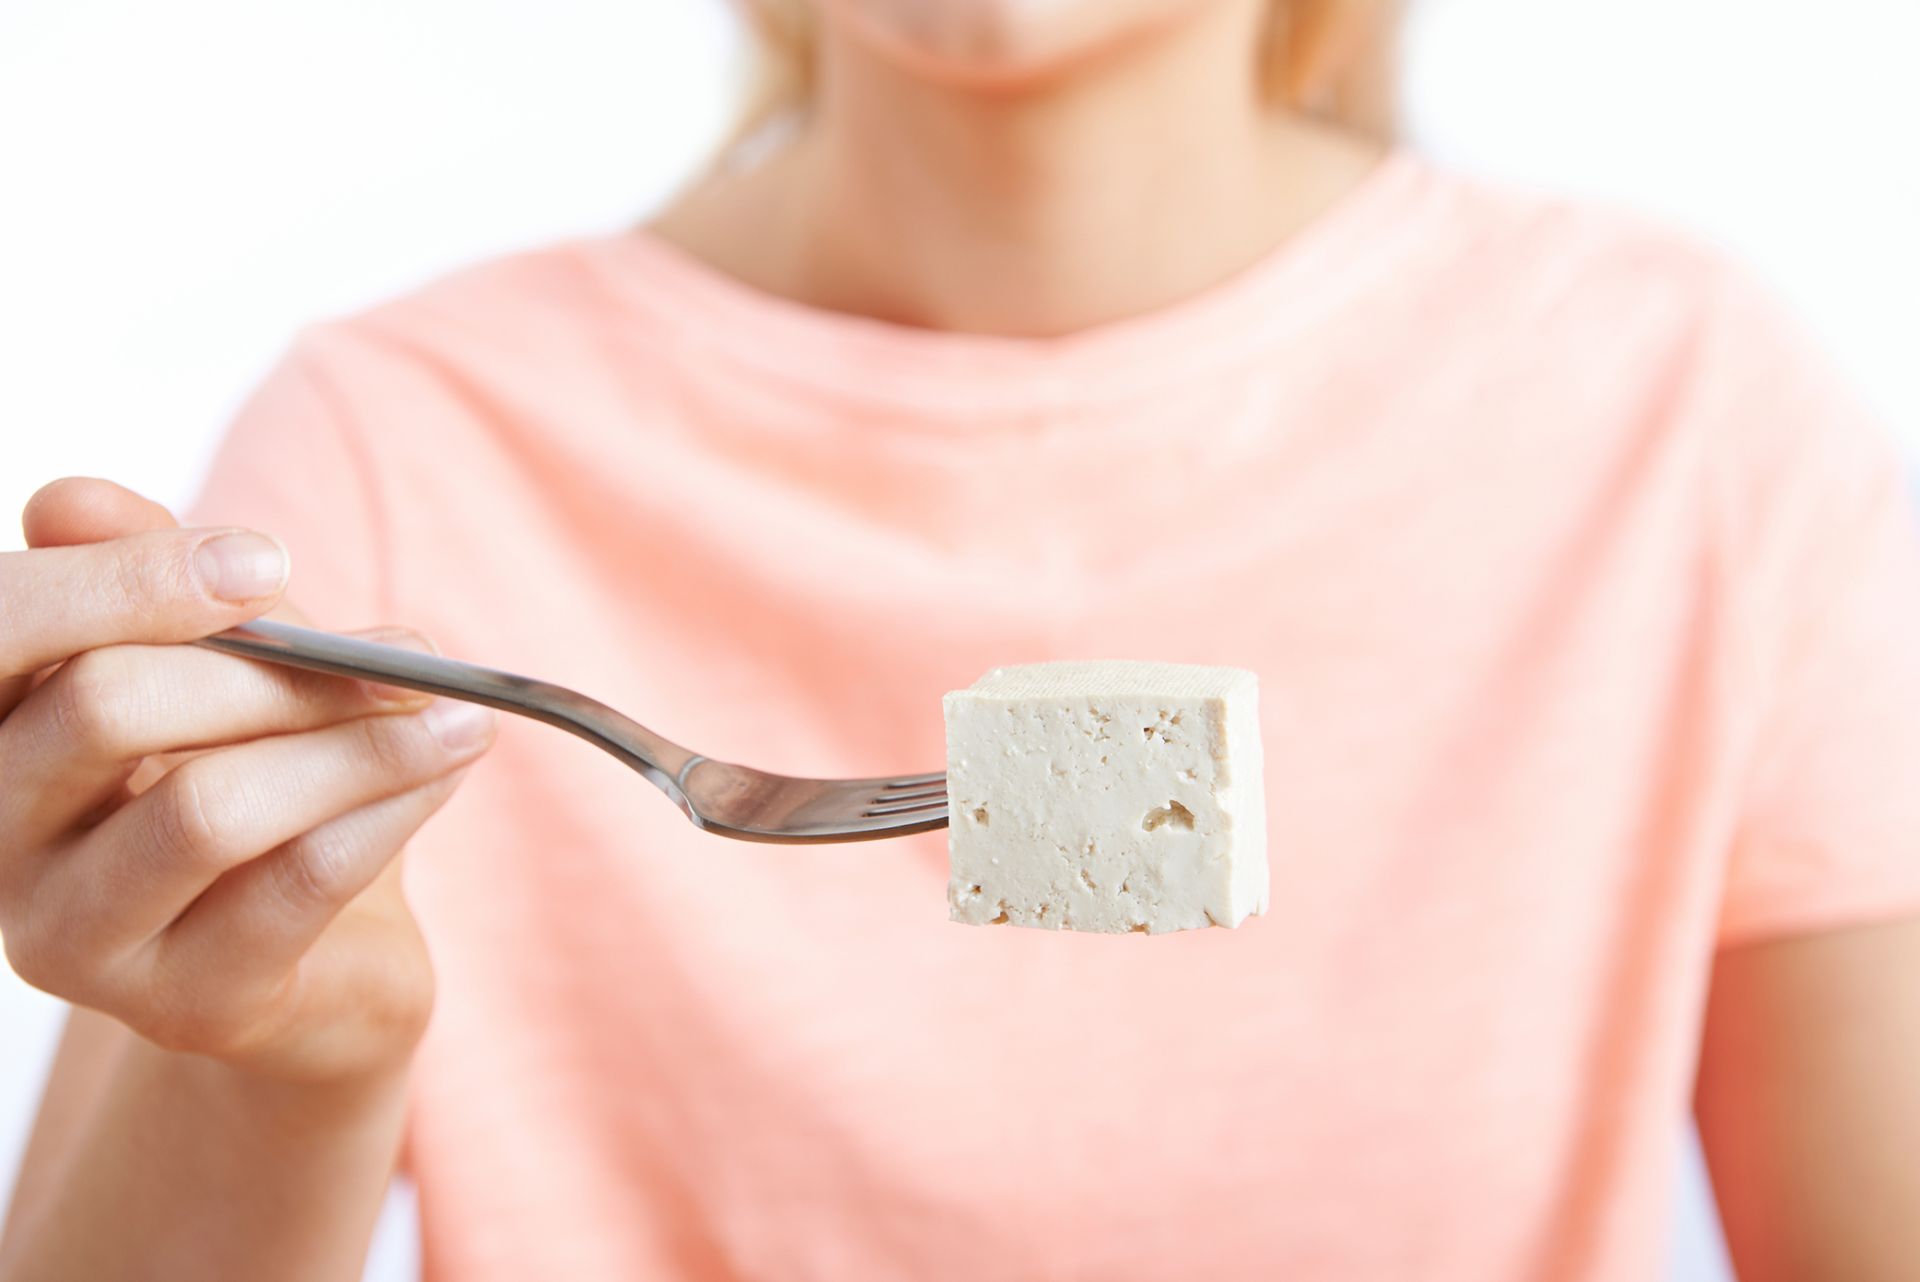 izguba teže s tofuom, rastlinski proteini, sojini izoflavoni